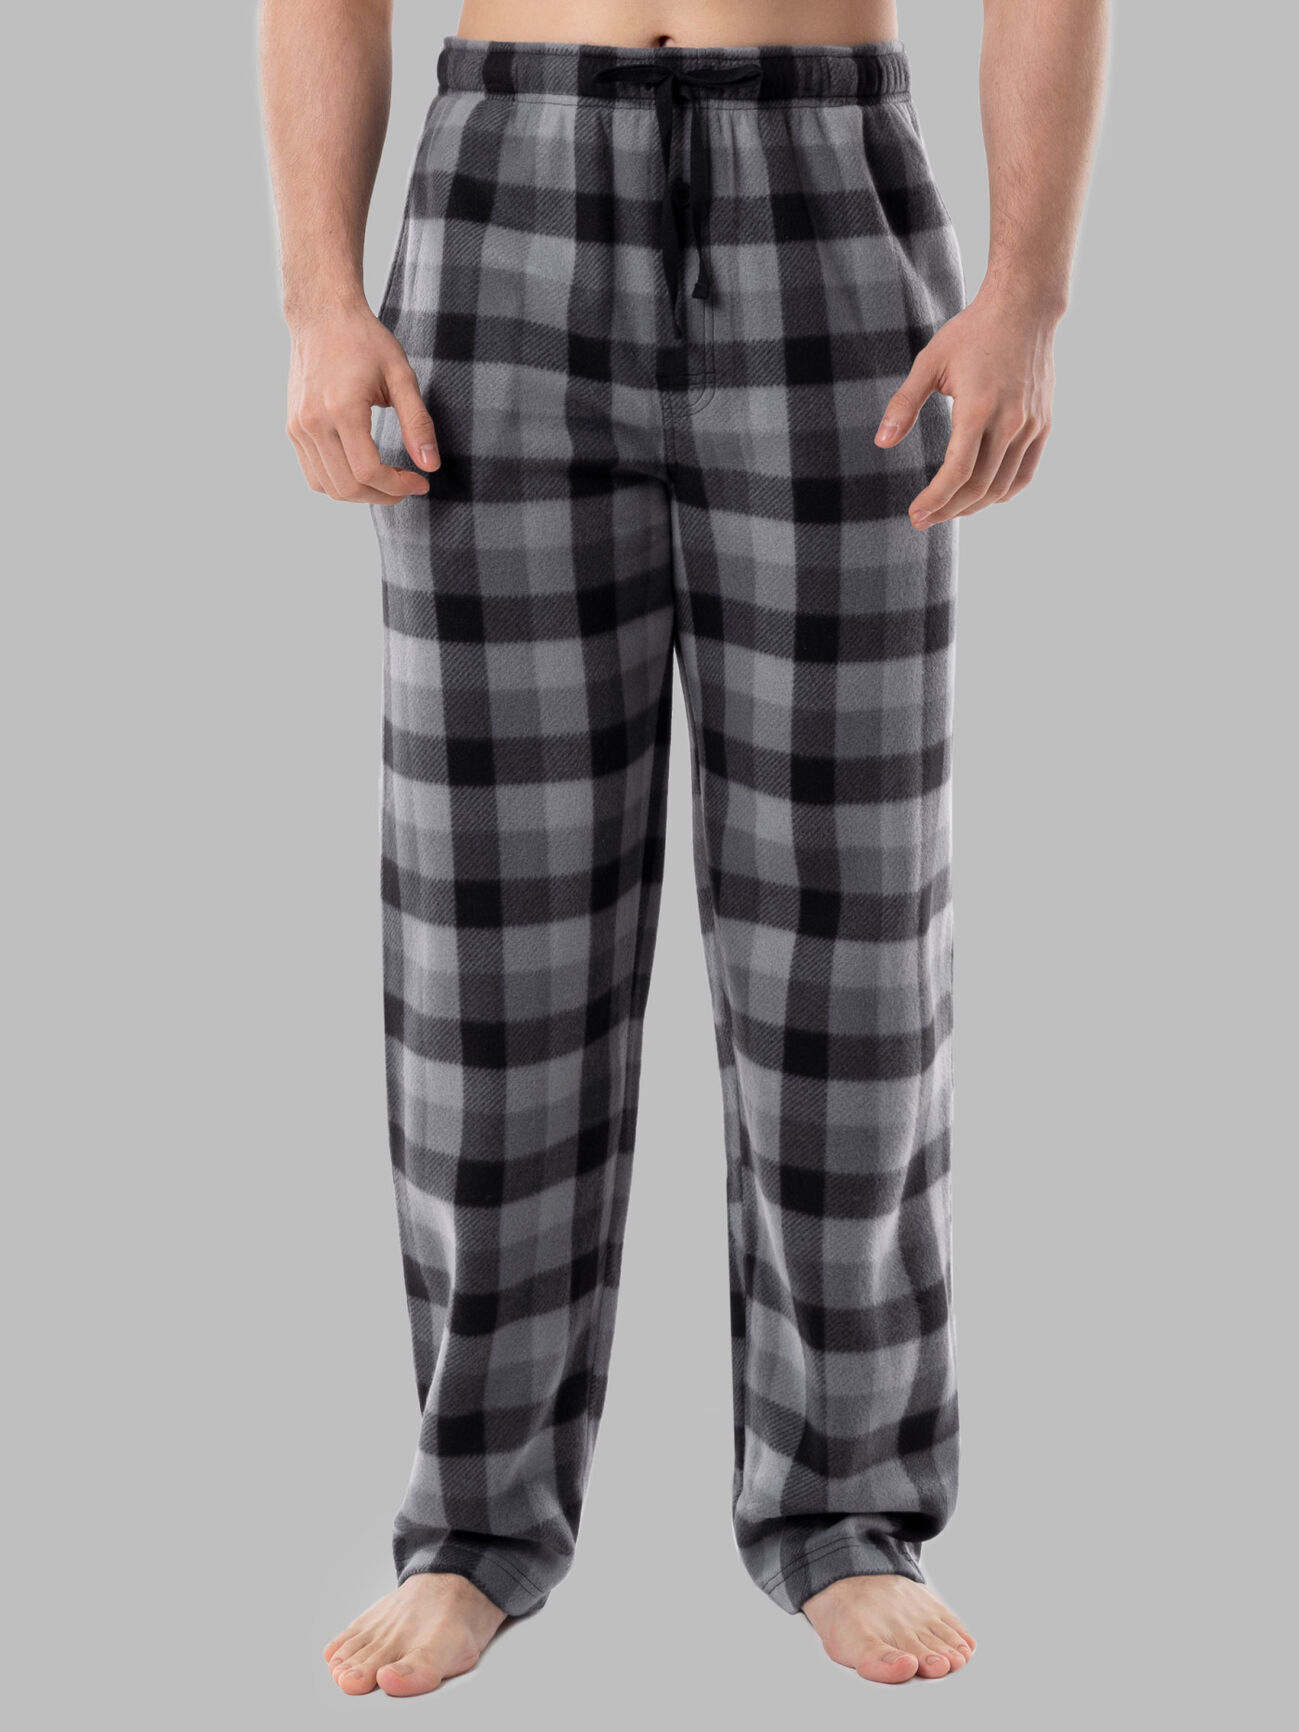 Ladies Flannel Pajama Boxer Shorts Comfortbale Lounge 2 Pack